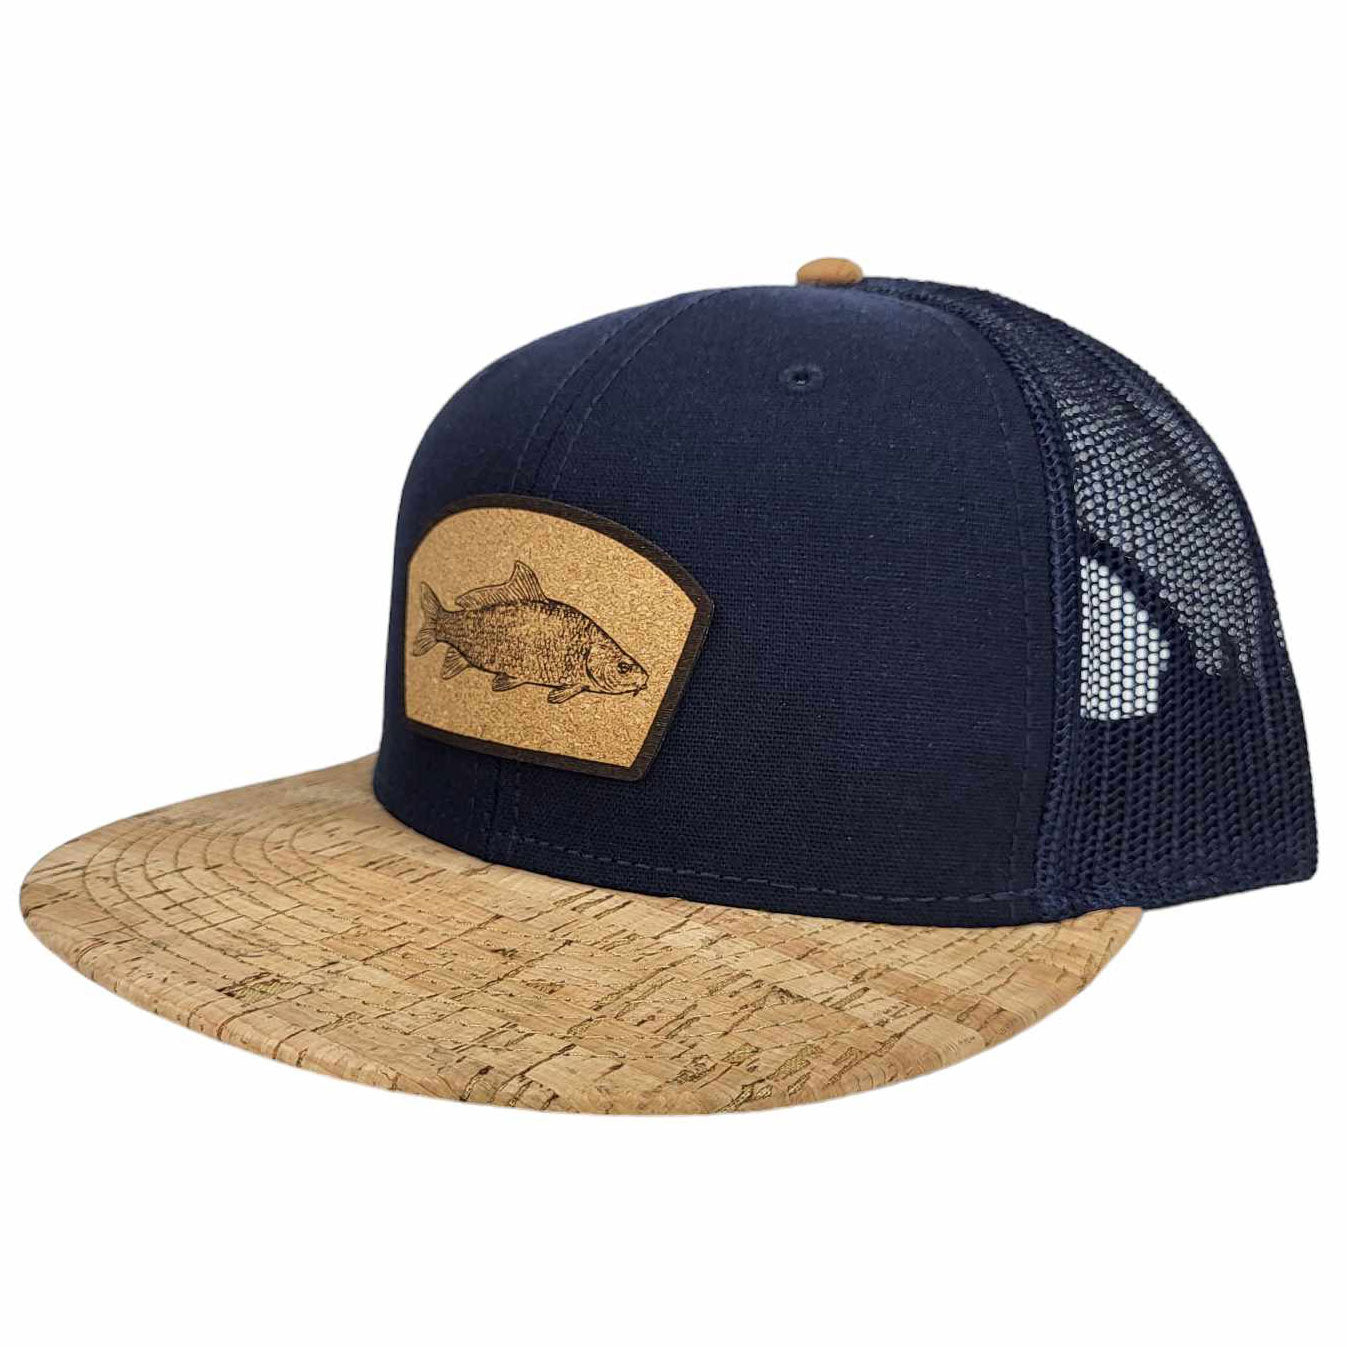 Carp Cork Fishing Hat